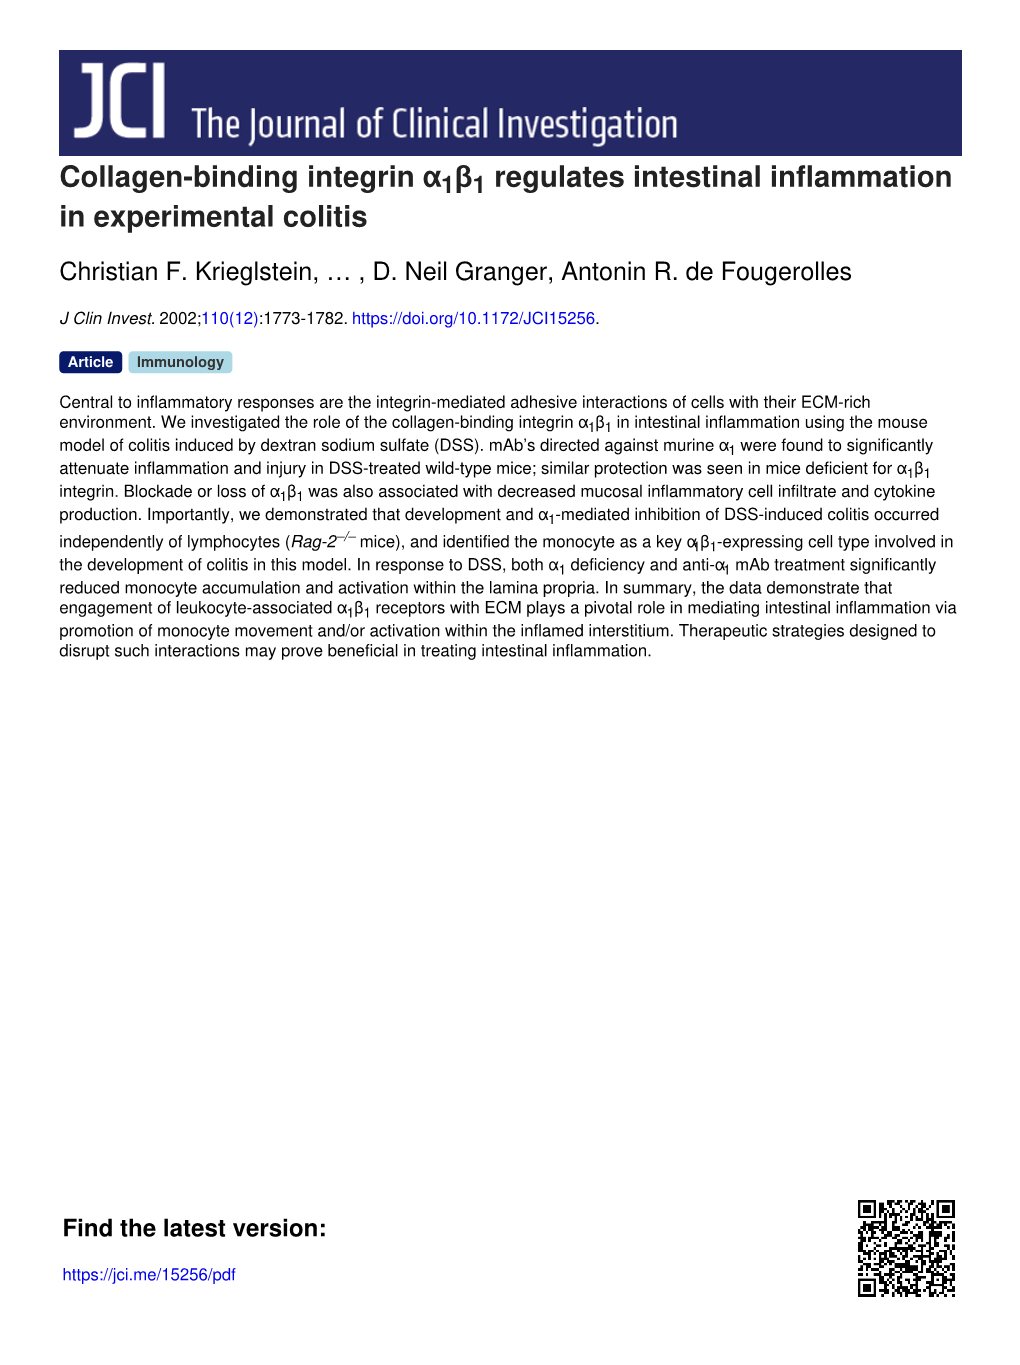 Collagen-Binding Integrin Α1 Β1 Regulates Intestinal Inflammation In